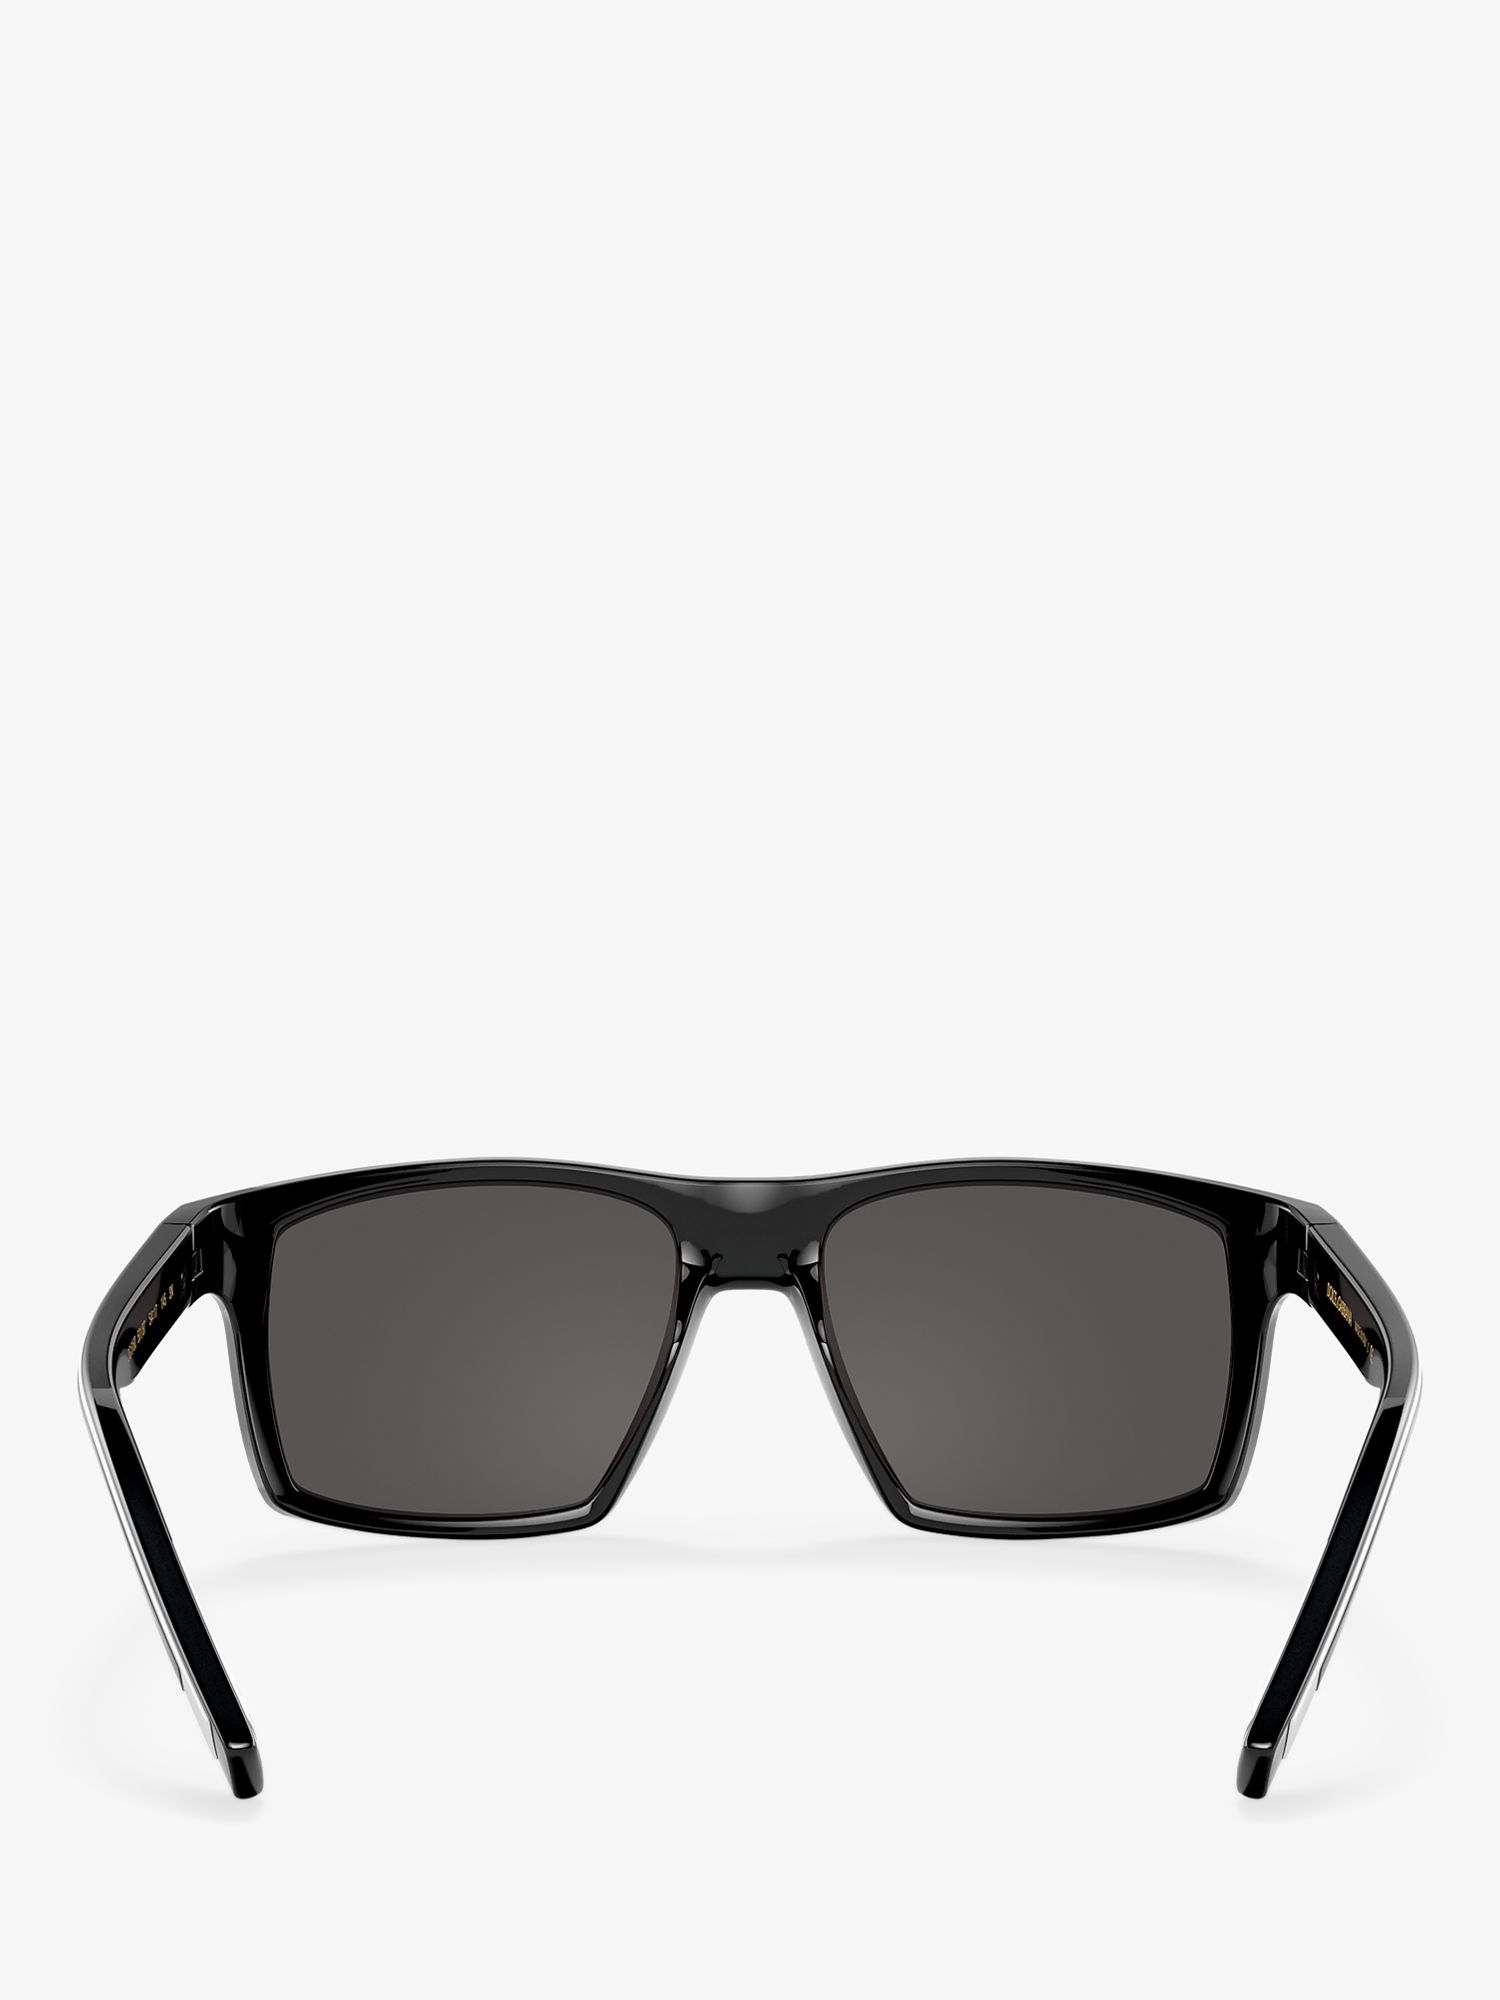 Buy Dolce & Gabbana DG6160 Men's Polarised Square Sunglasses, Grey Online at johnlewis.com